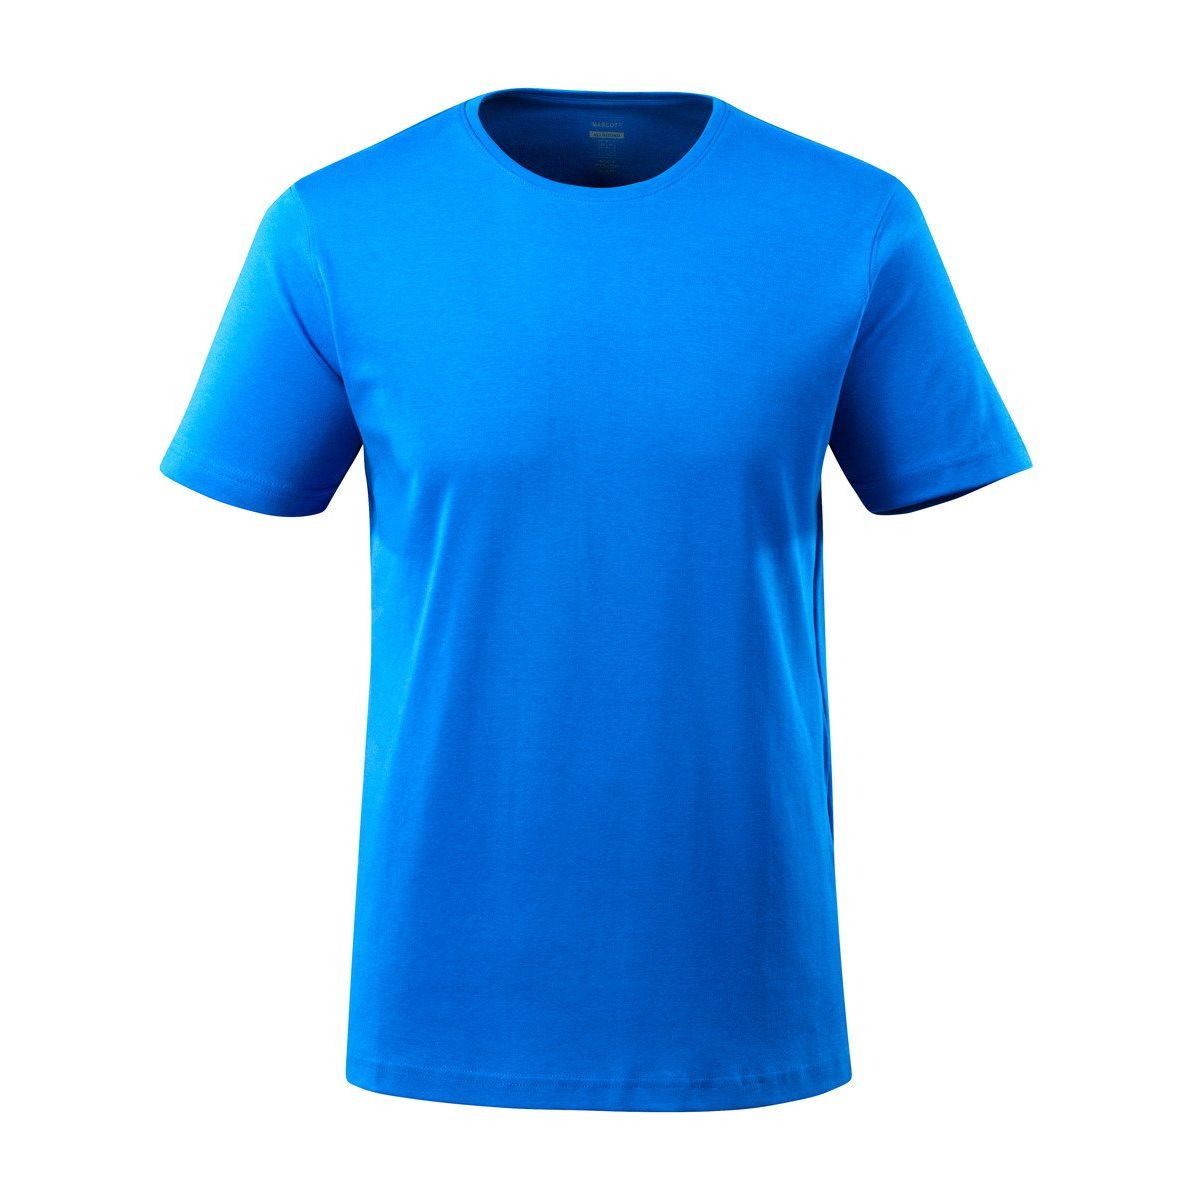 Mascot Vence T-shirt Slim-Fit Azure Blue 51585-967-91 Front